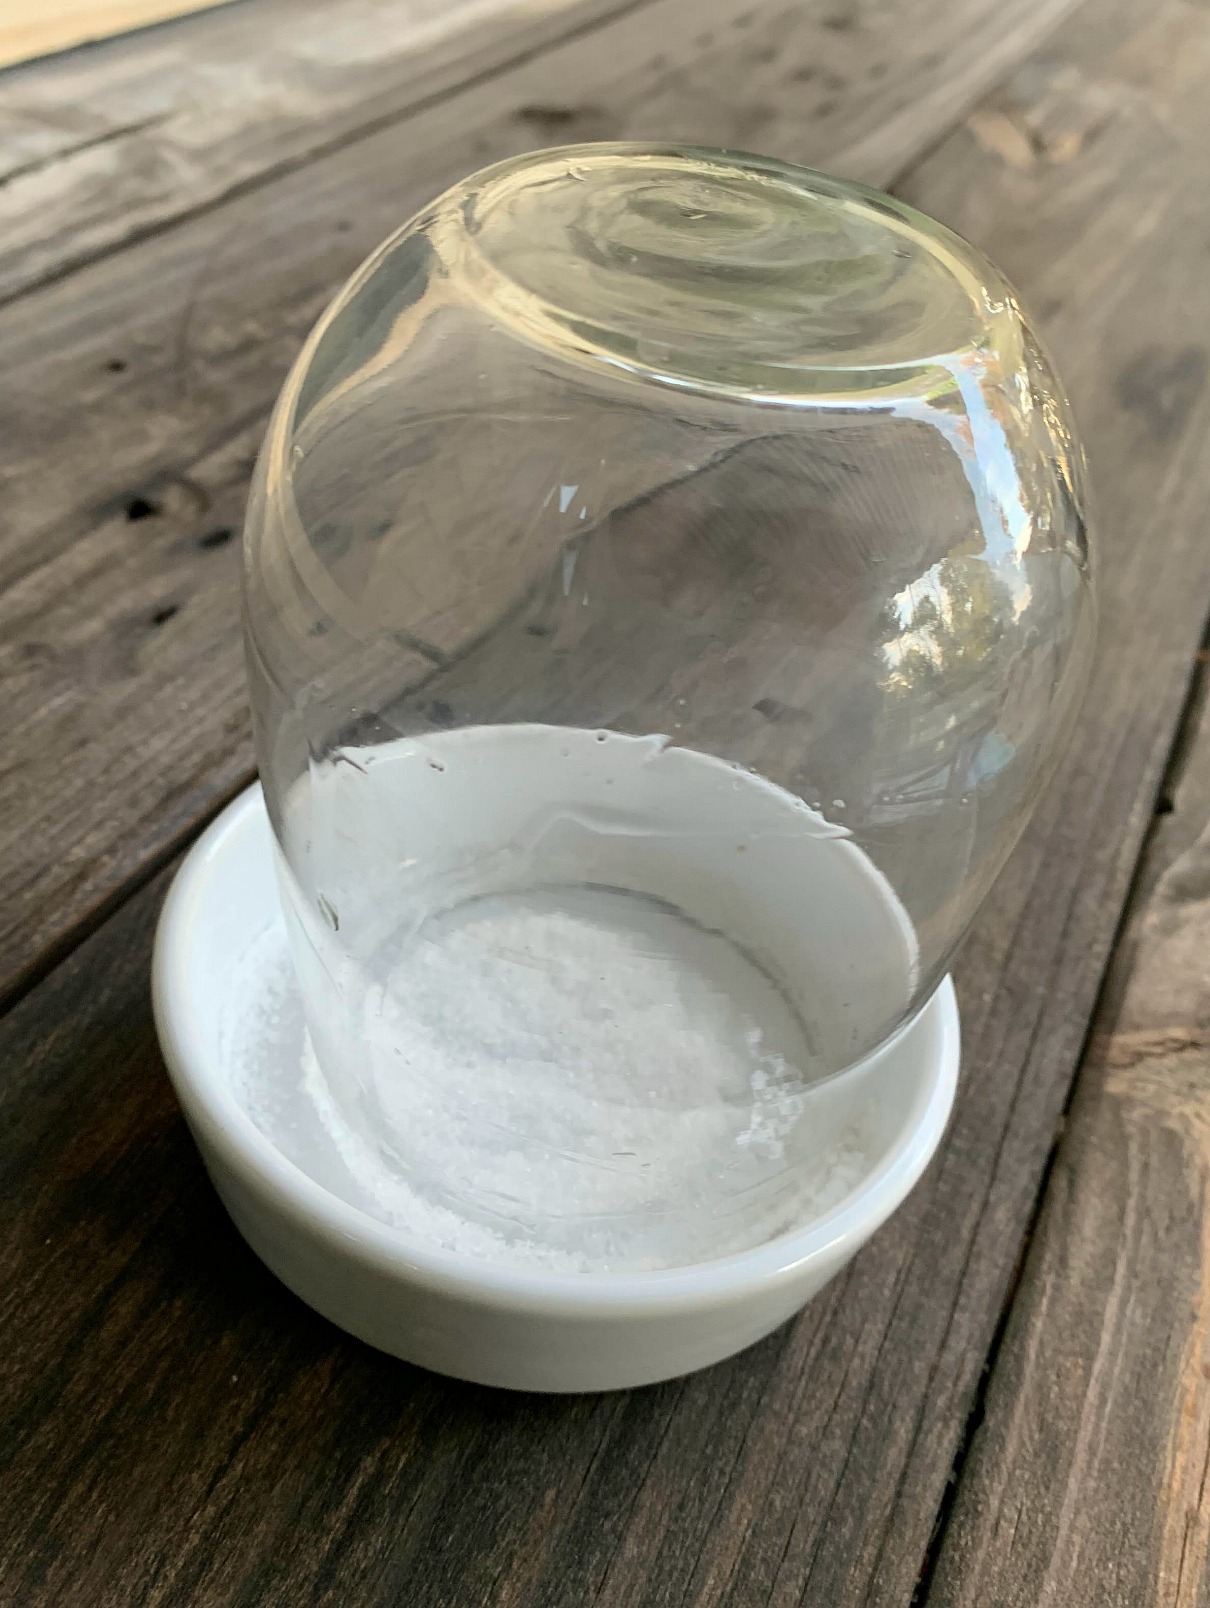 a glass upside down in a dish of sugar